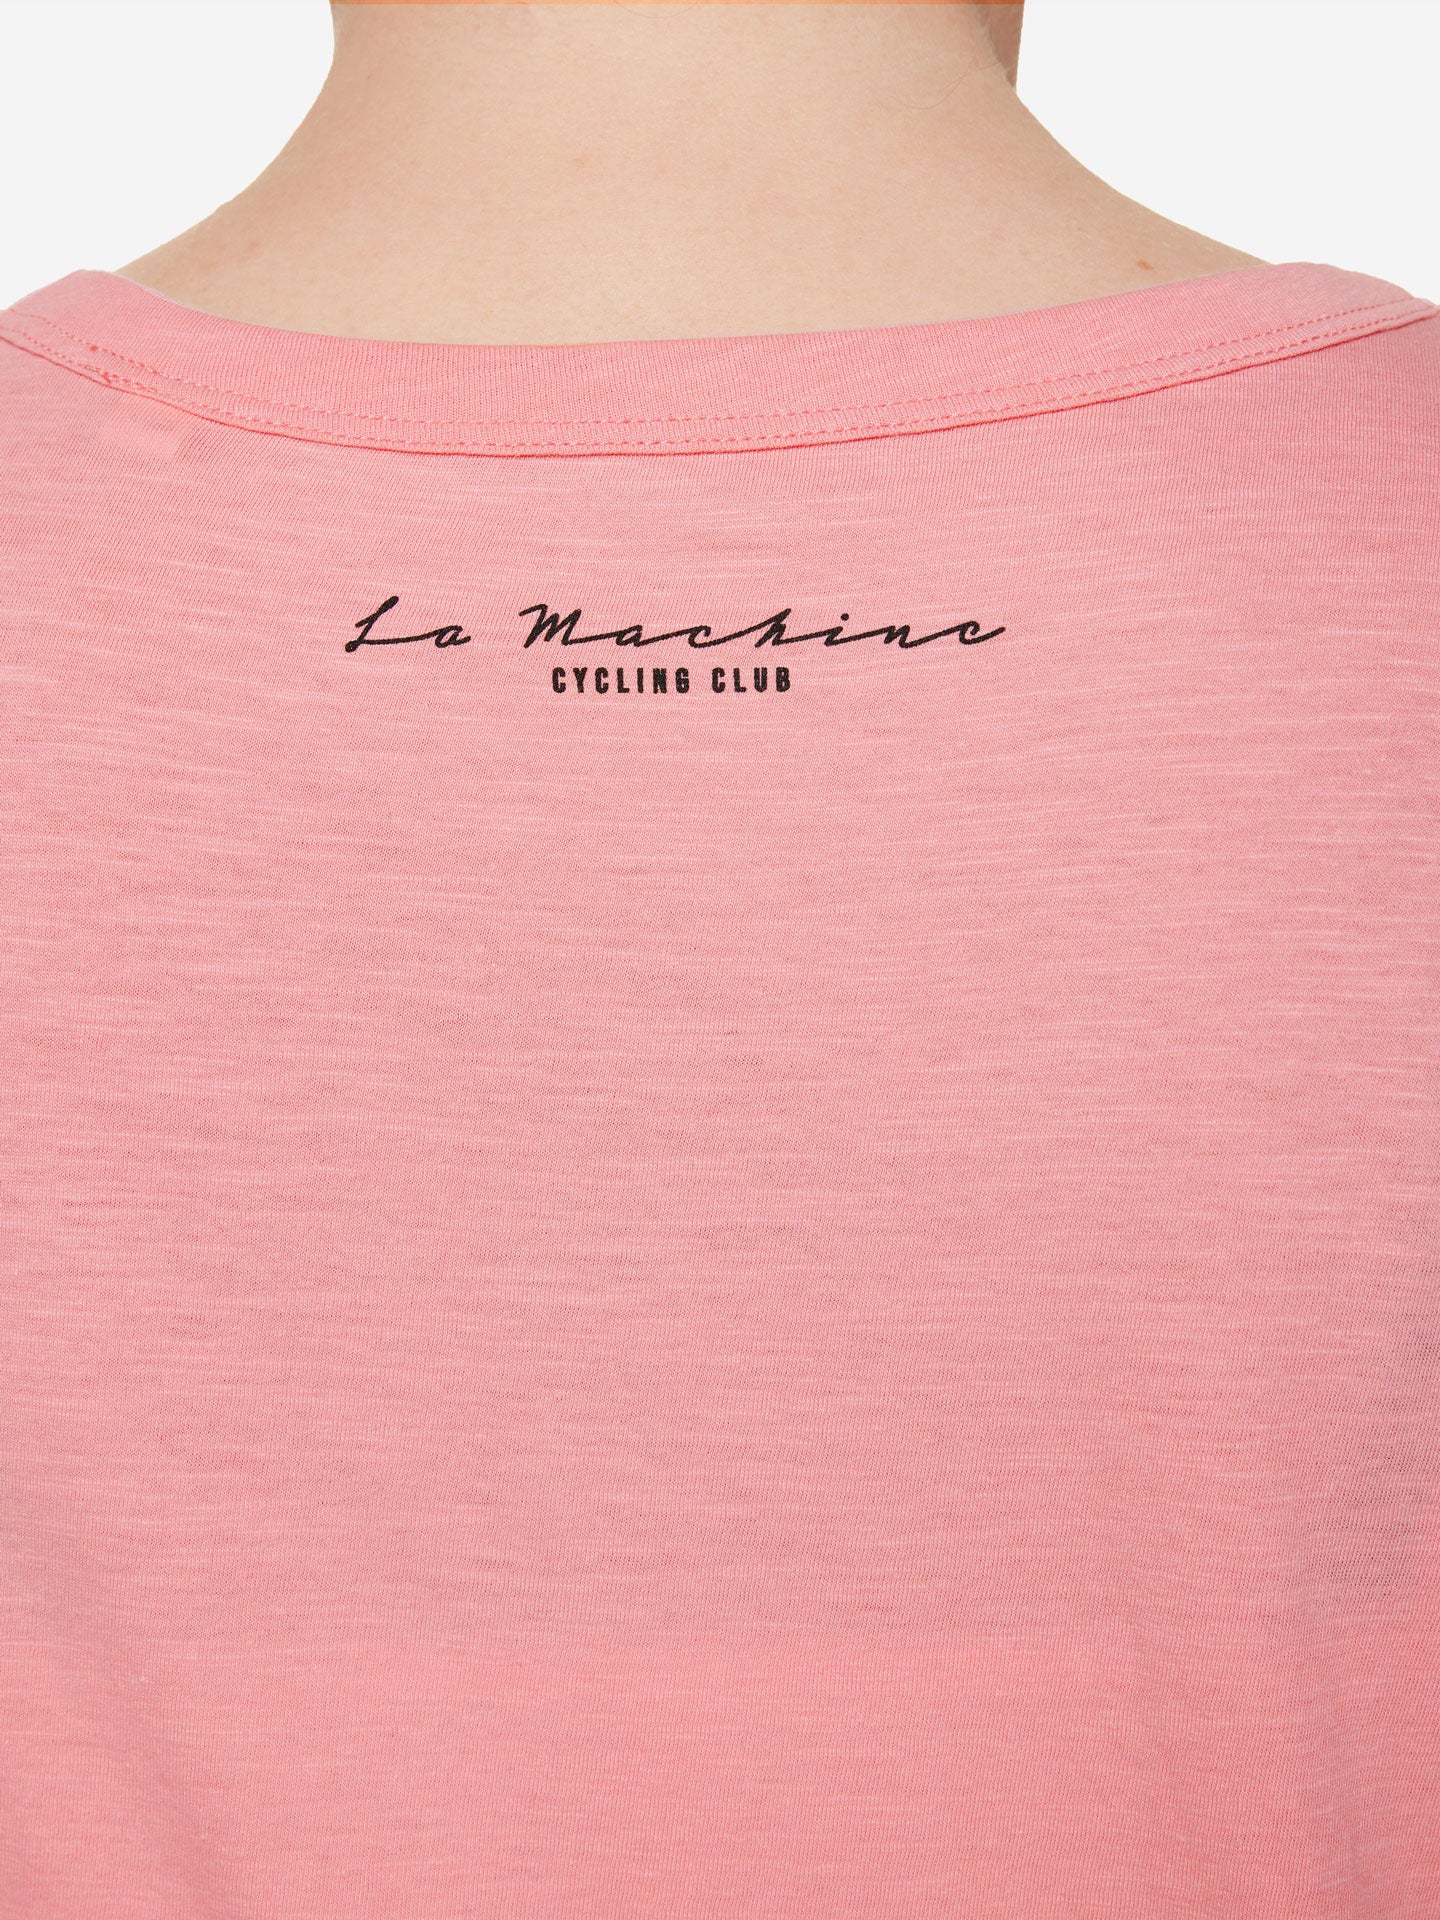 Bib number 13 - Women' s T-shirt - La Machine Cycling Club